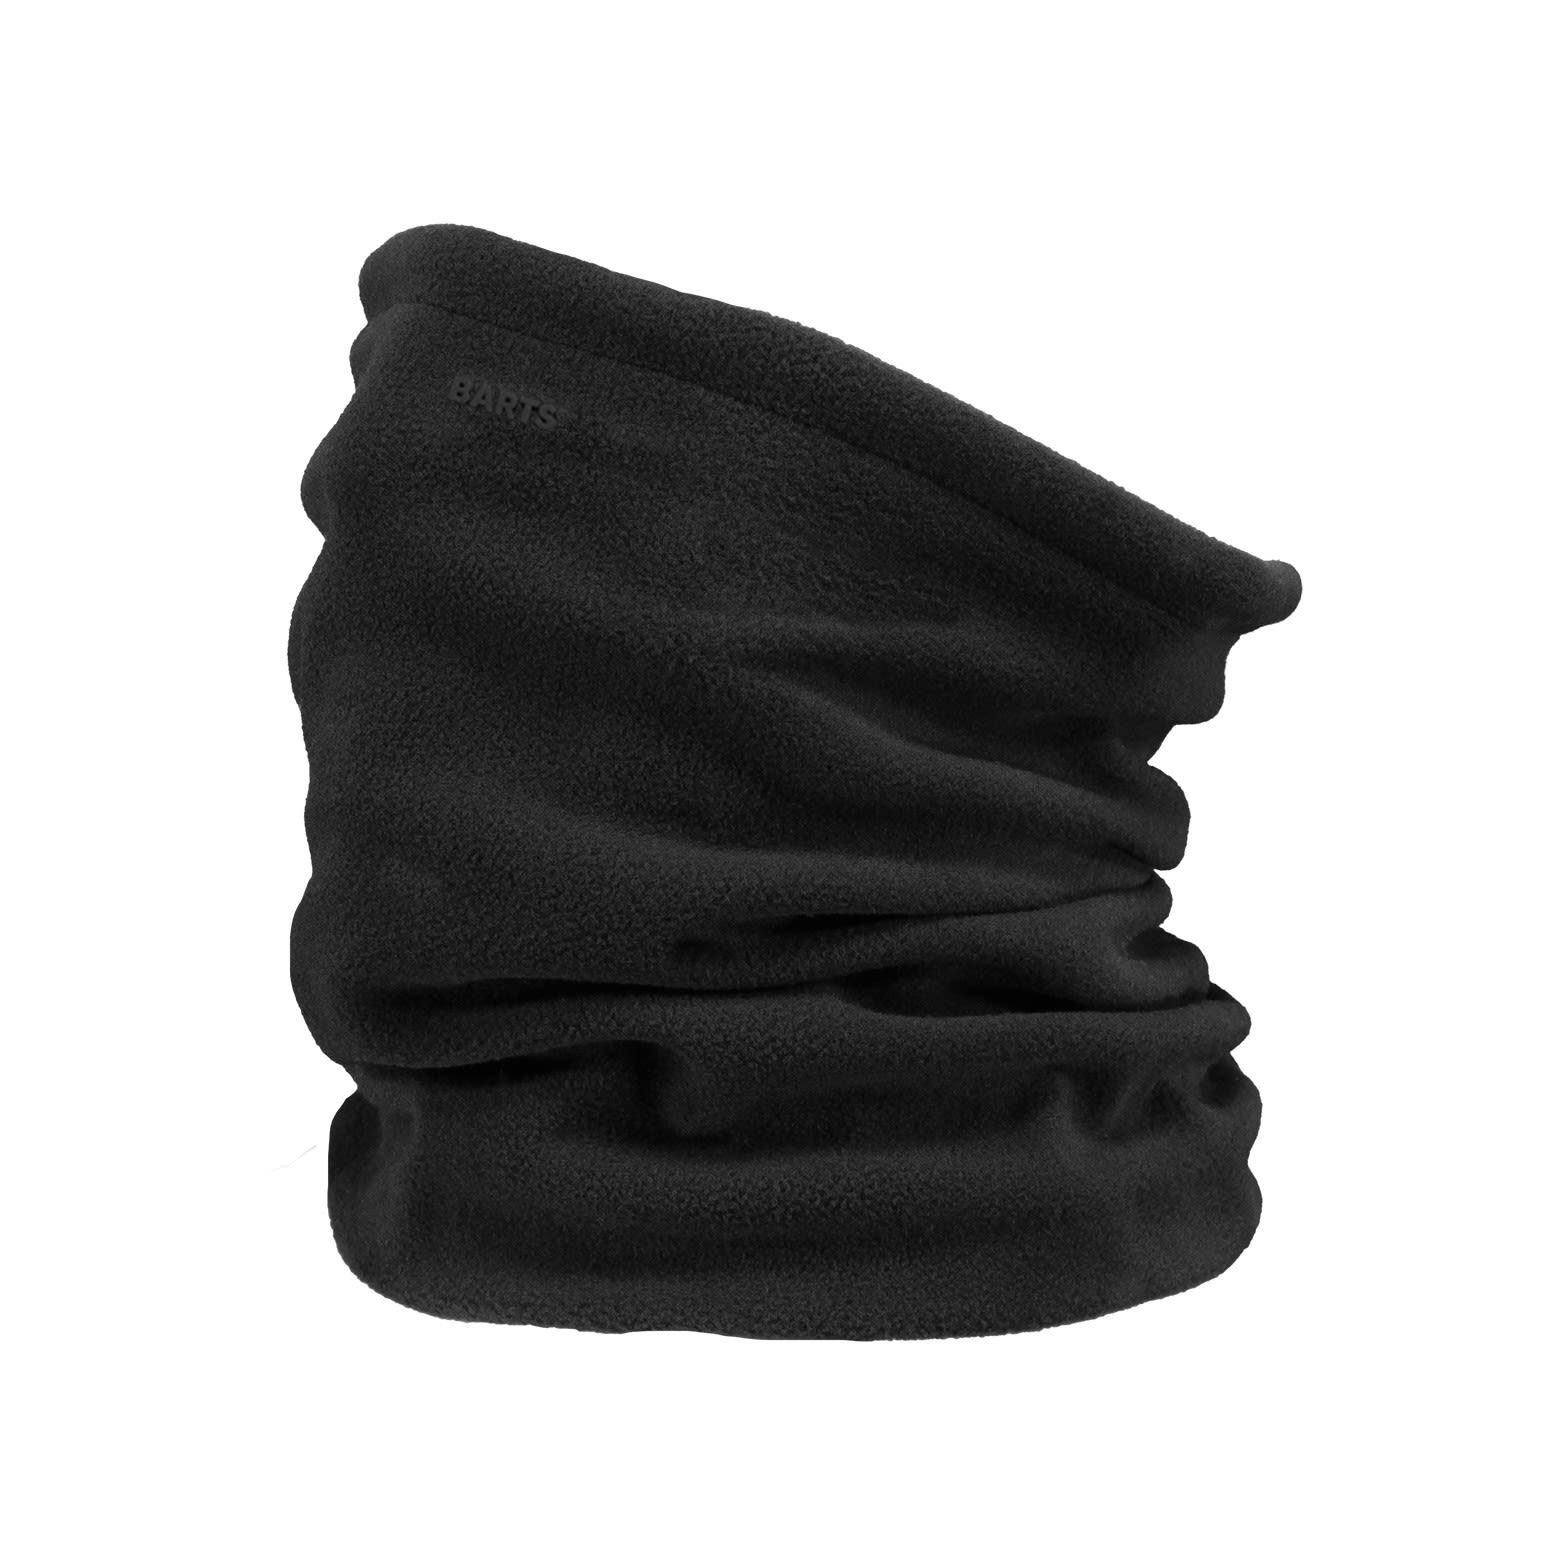 Barts Schal Barts Fleece Col Accessoires Black